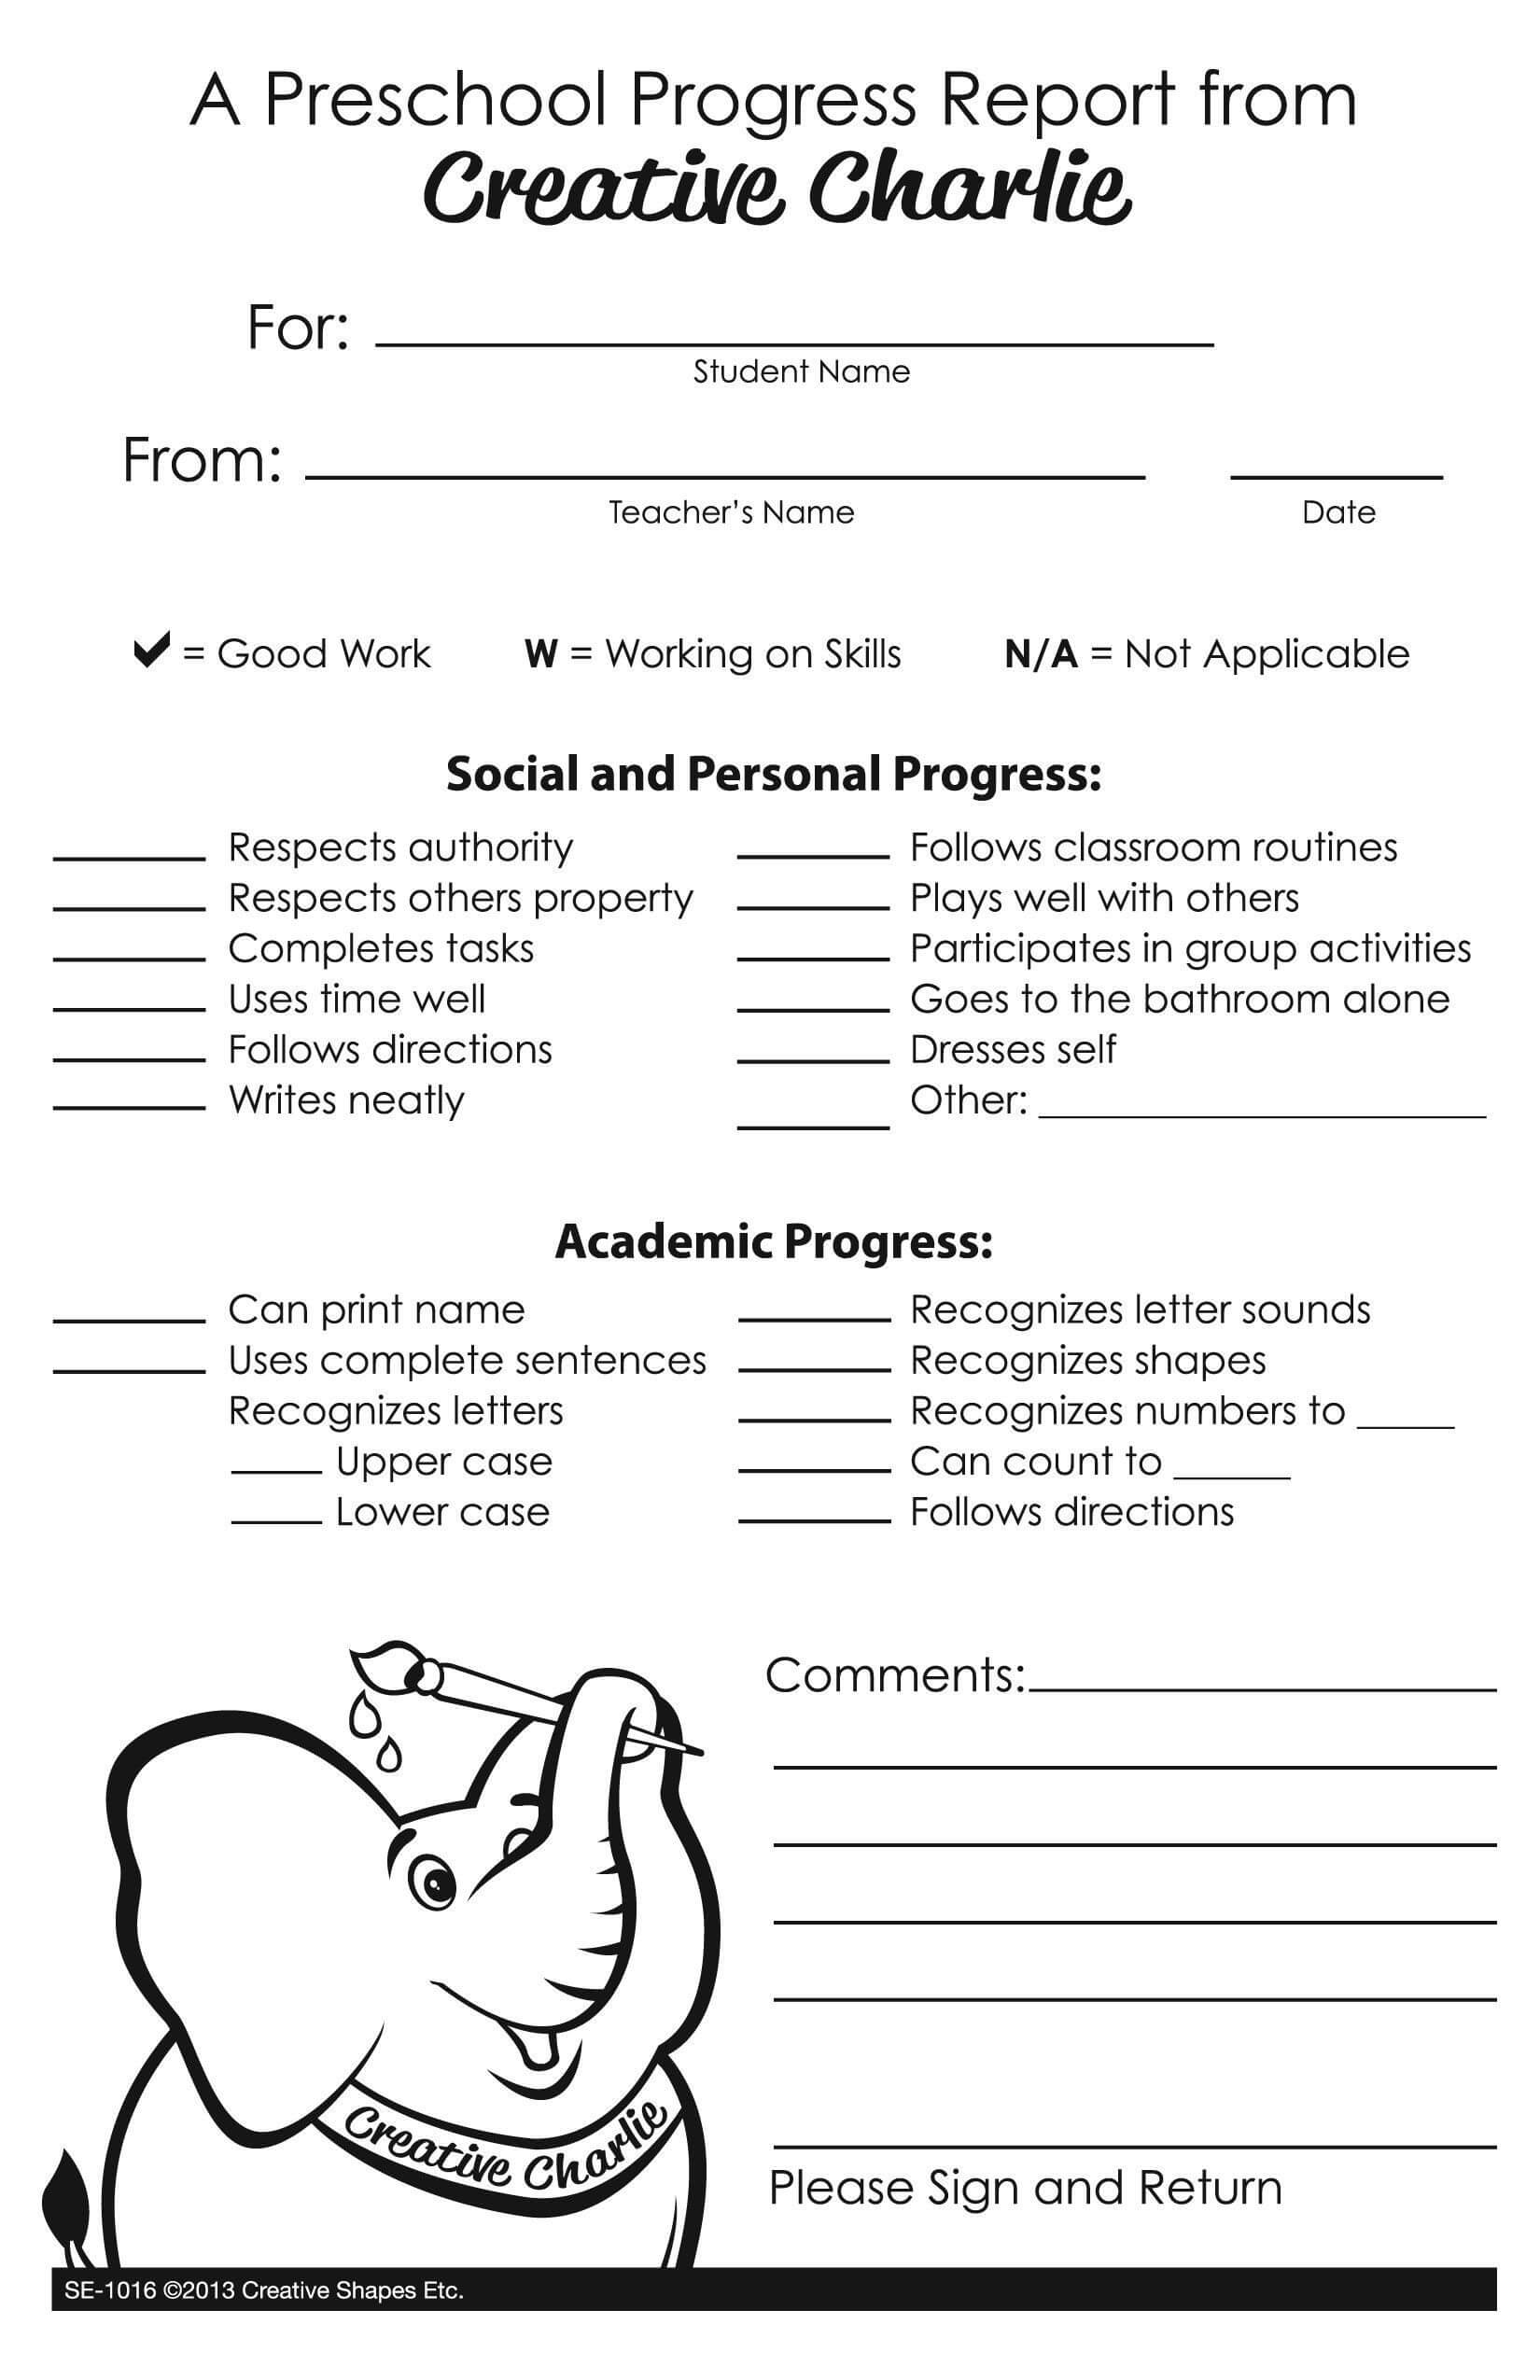 Notes From Teachers – Preschool Progress Report | Products Inside Preschool Progress Report Template